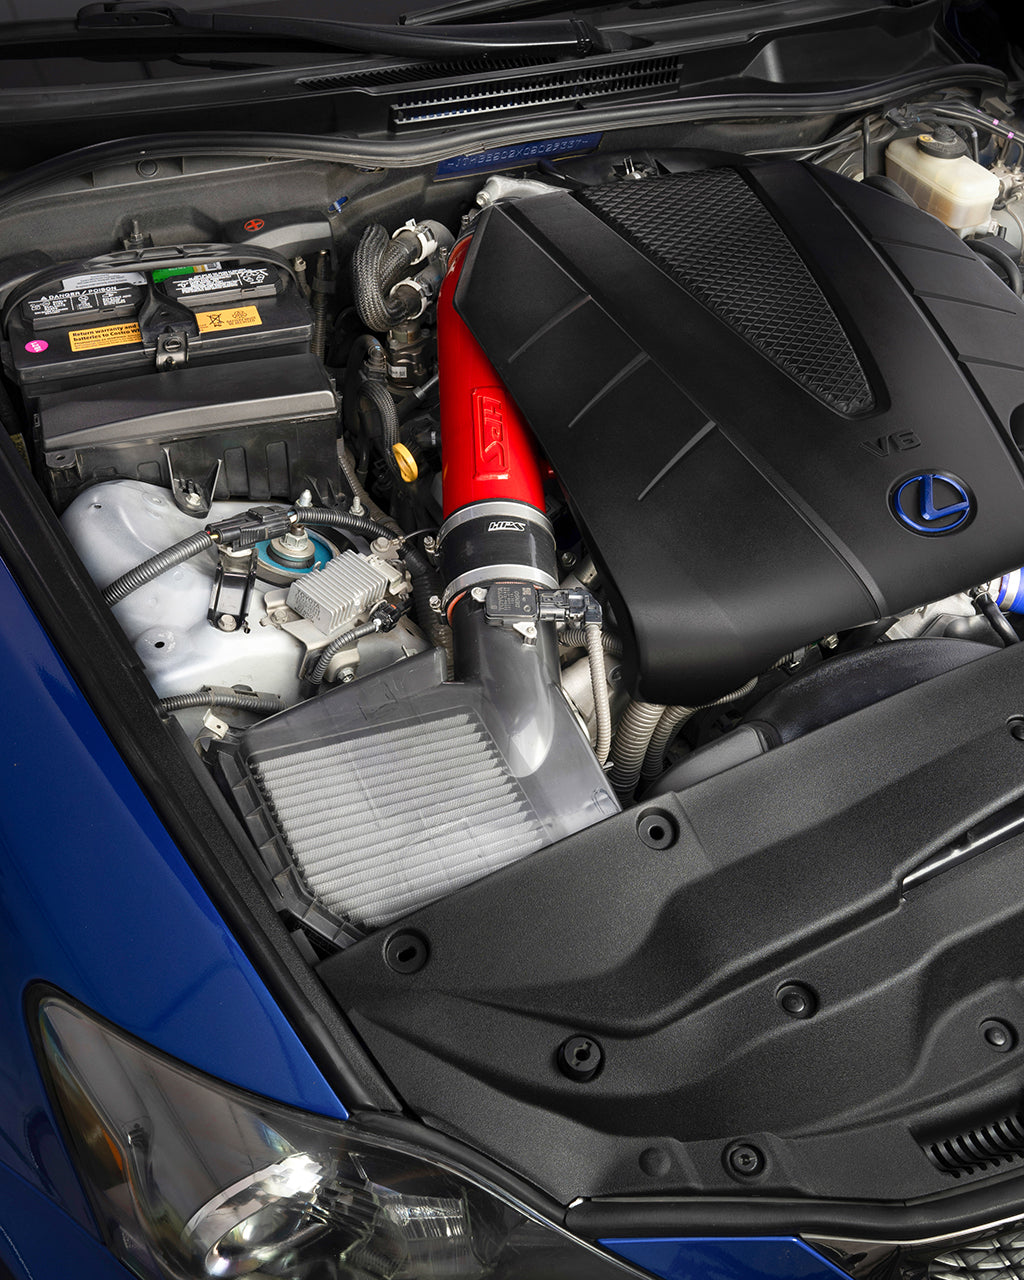 HPS Red Cold Air Intake Kit Post MAF Tube + High Flow Filter Installed 2010-2015 Lexus IS350C 3.5L V6 827-710R